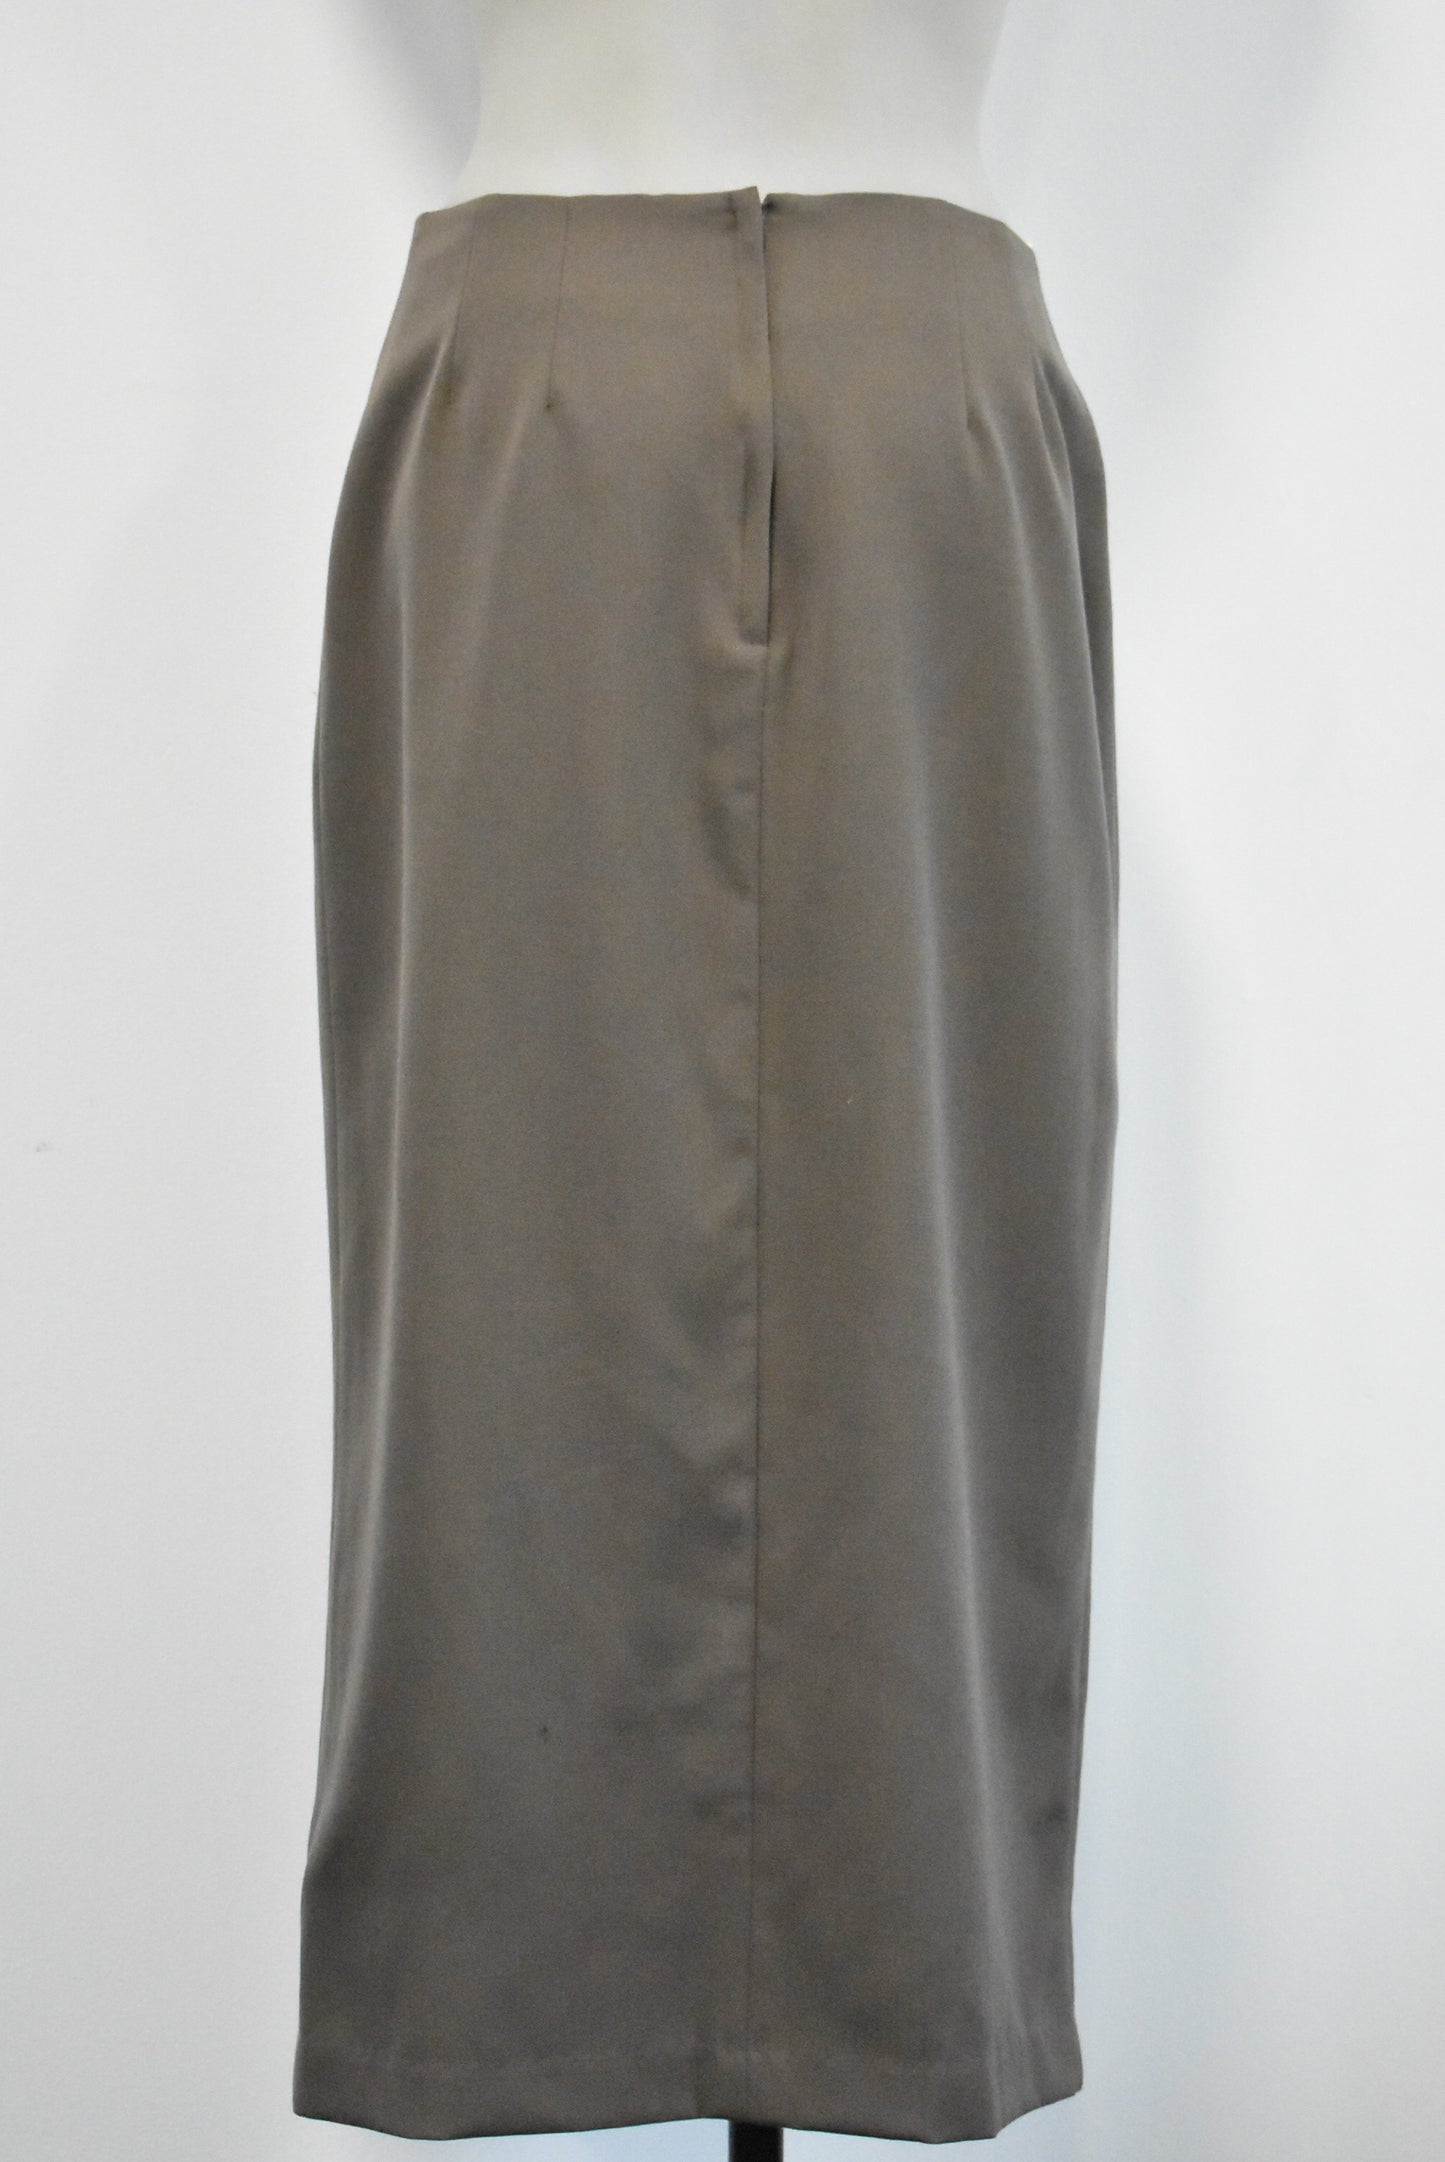 Retro Chow Mein grey NZ-made pencil skirt, 12